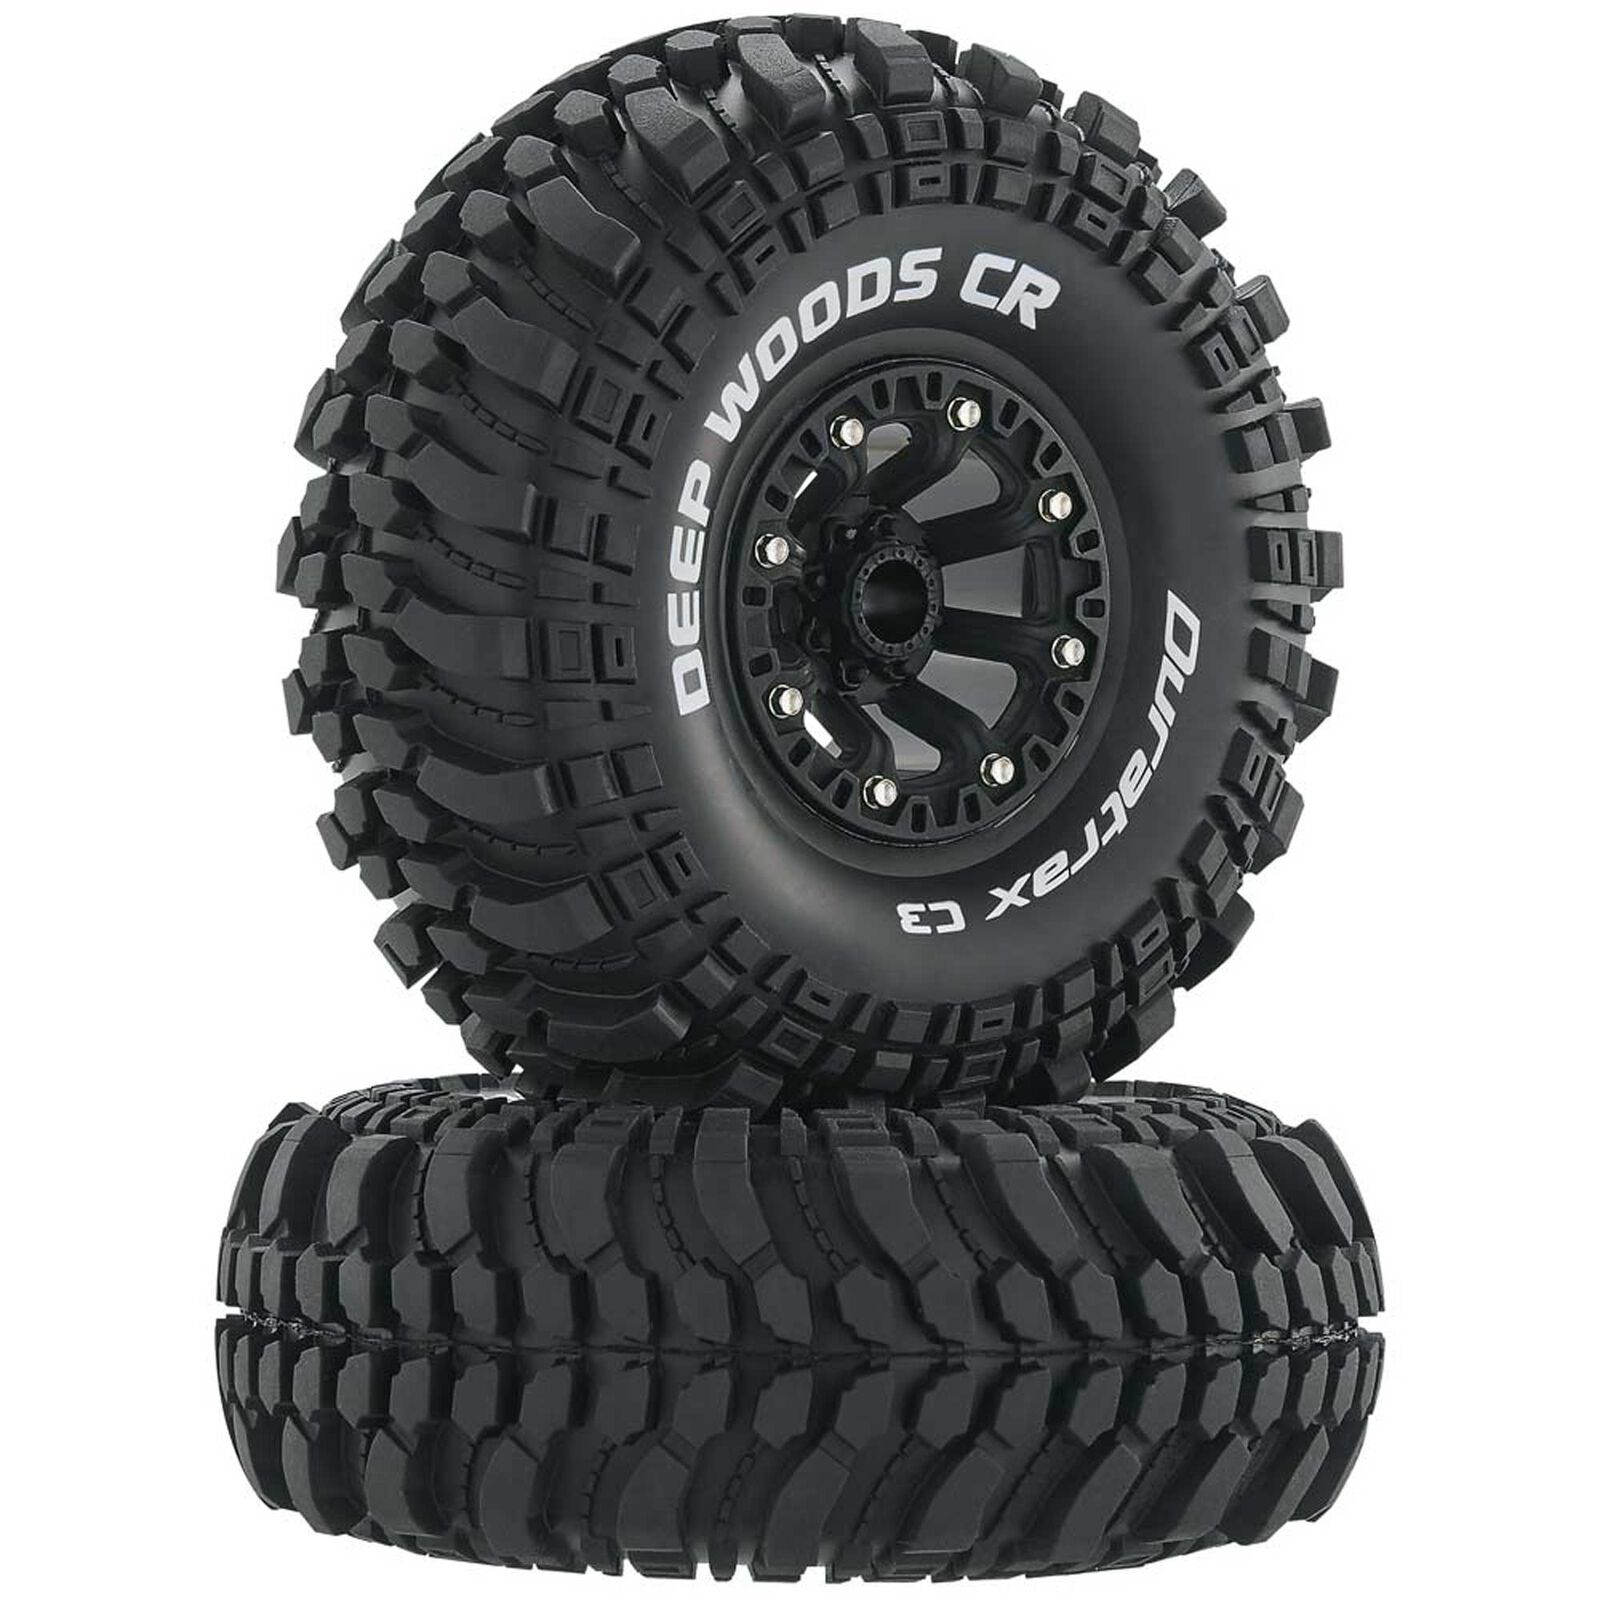 Deep Woods CR C3 Mounted 2.2" Crawler Tires, Black (2)